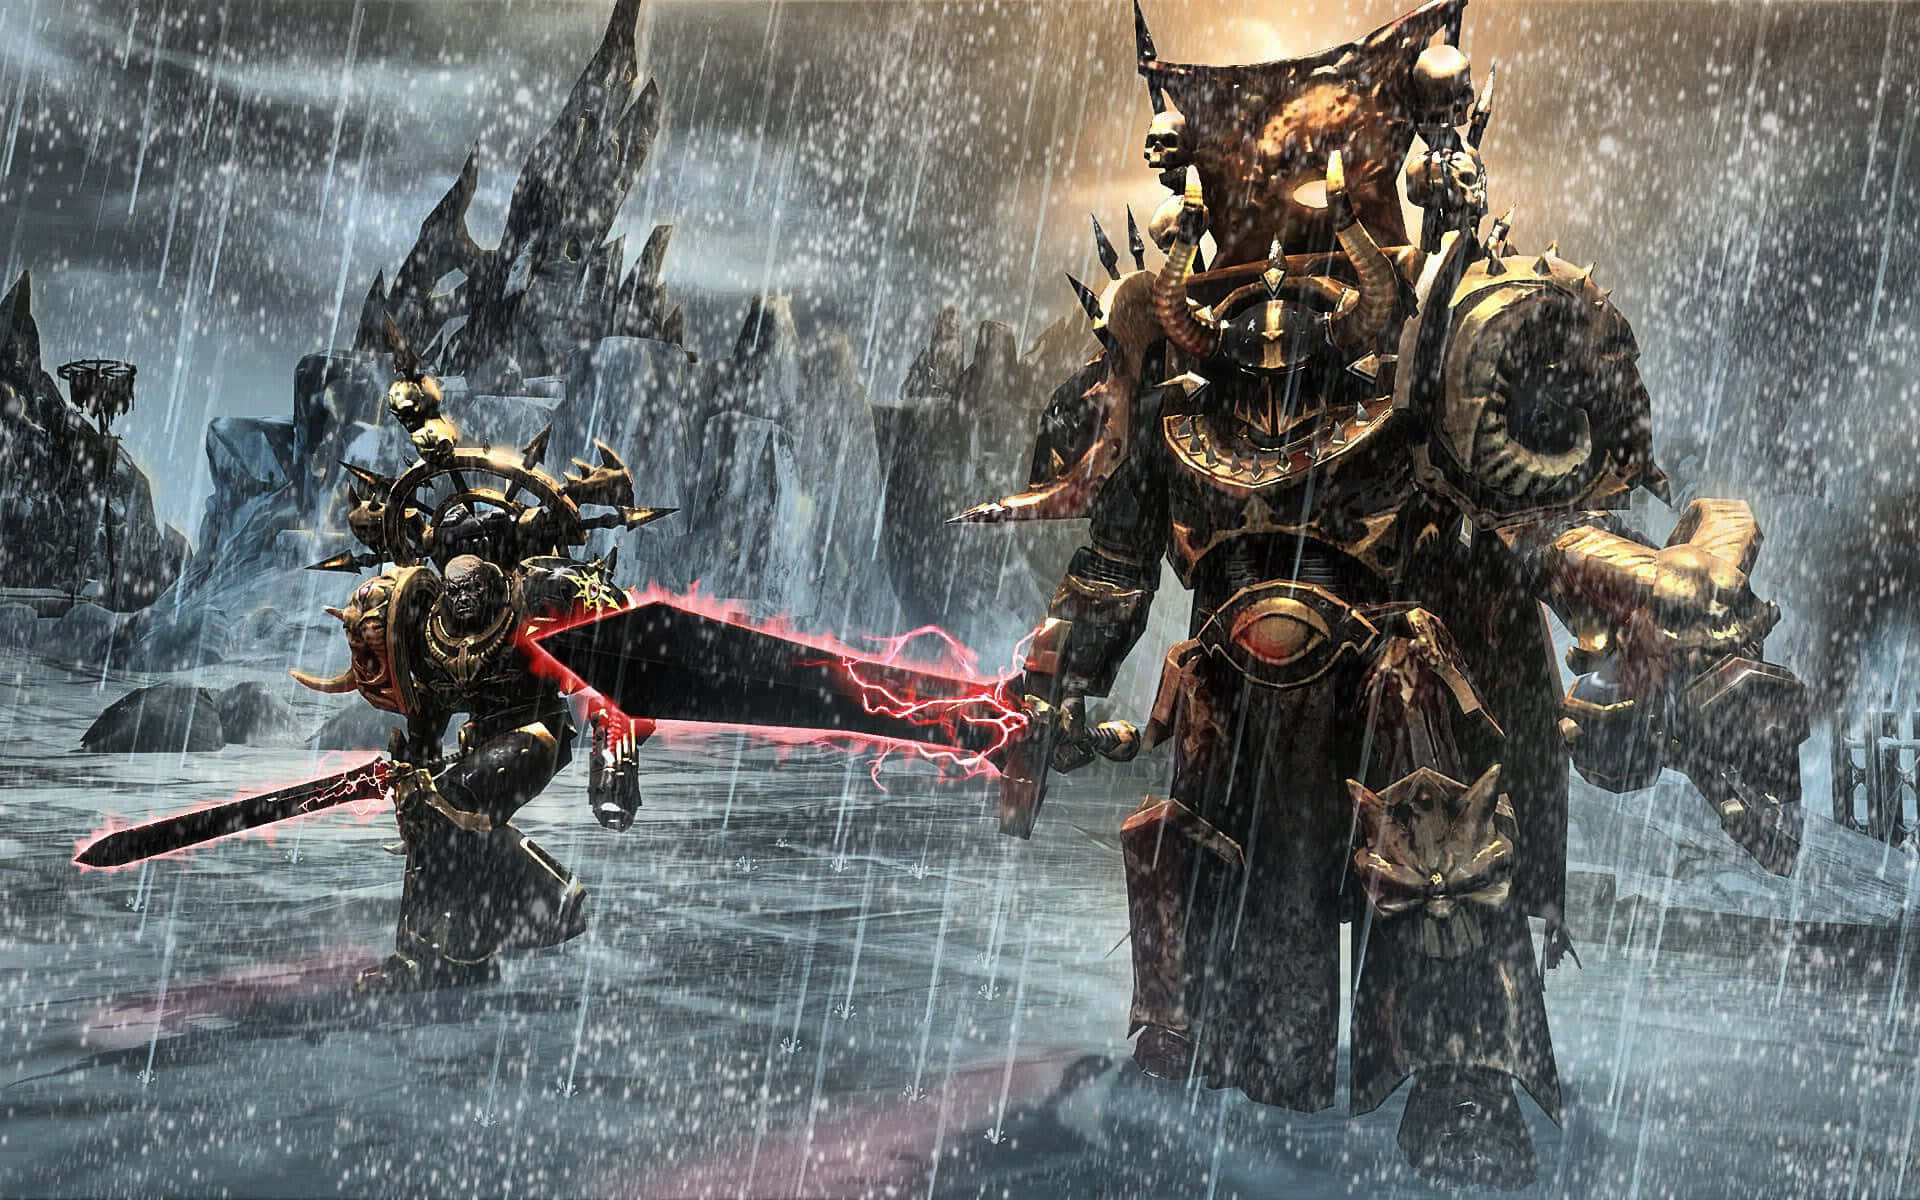 Rock et evigt krig i Warhammer 4k-verdenen! Wallpaper